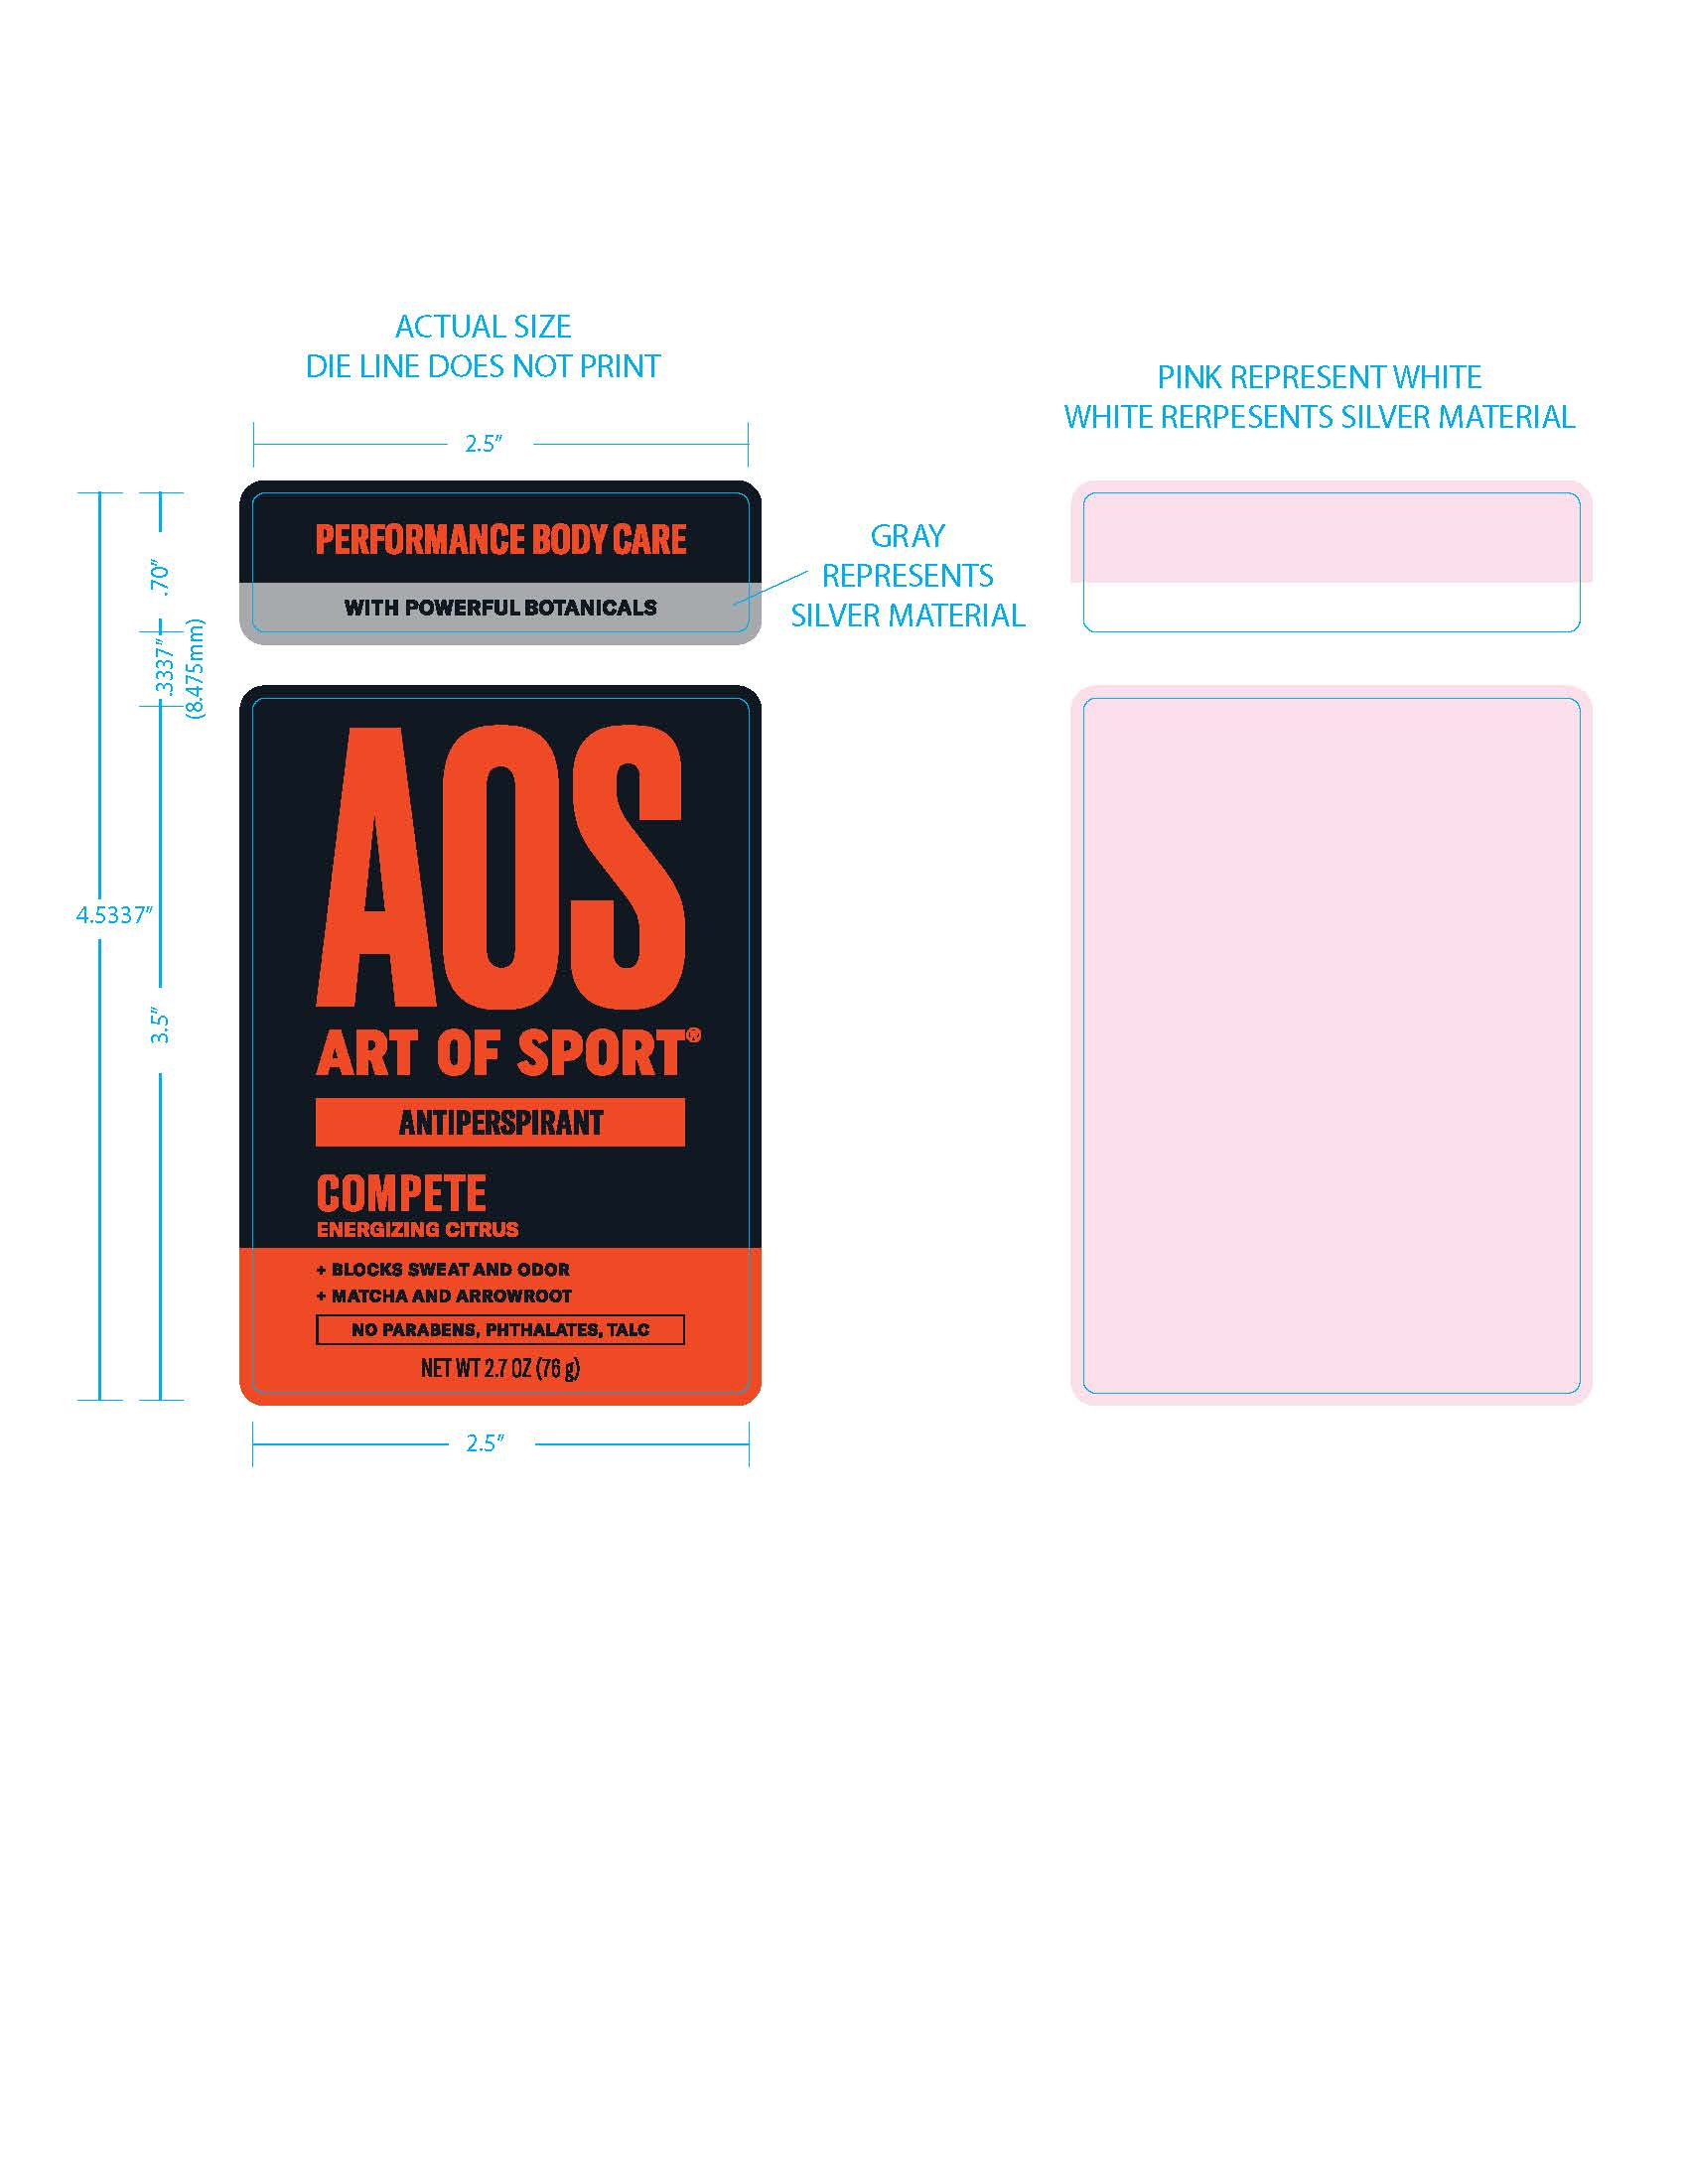 Art of Sport Compete Antiperspirant front label